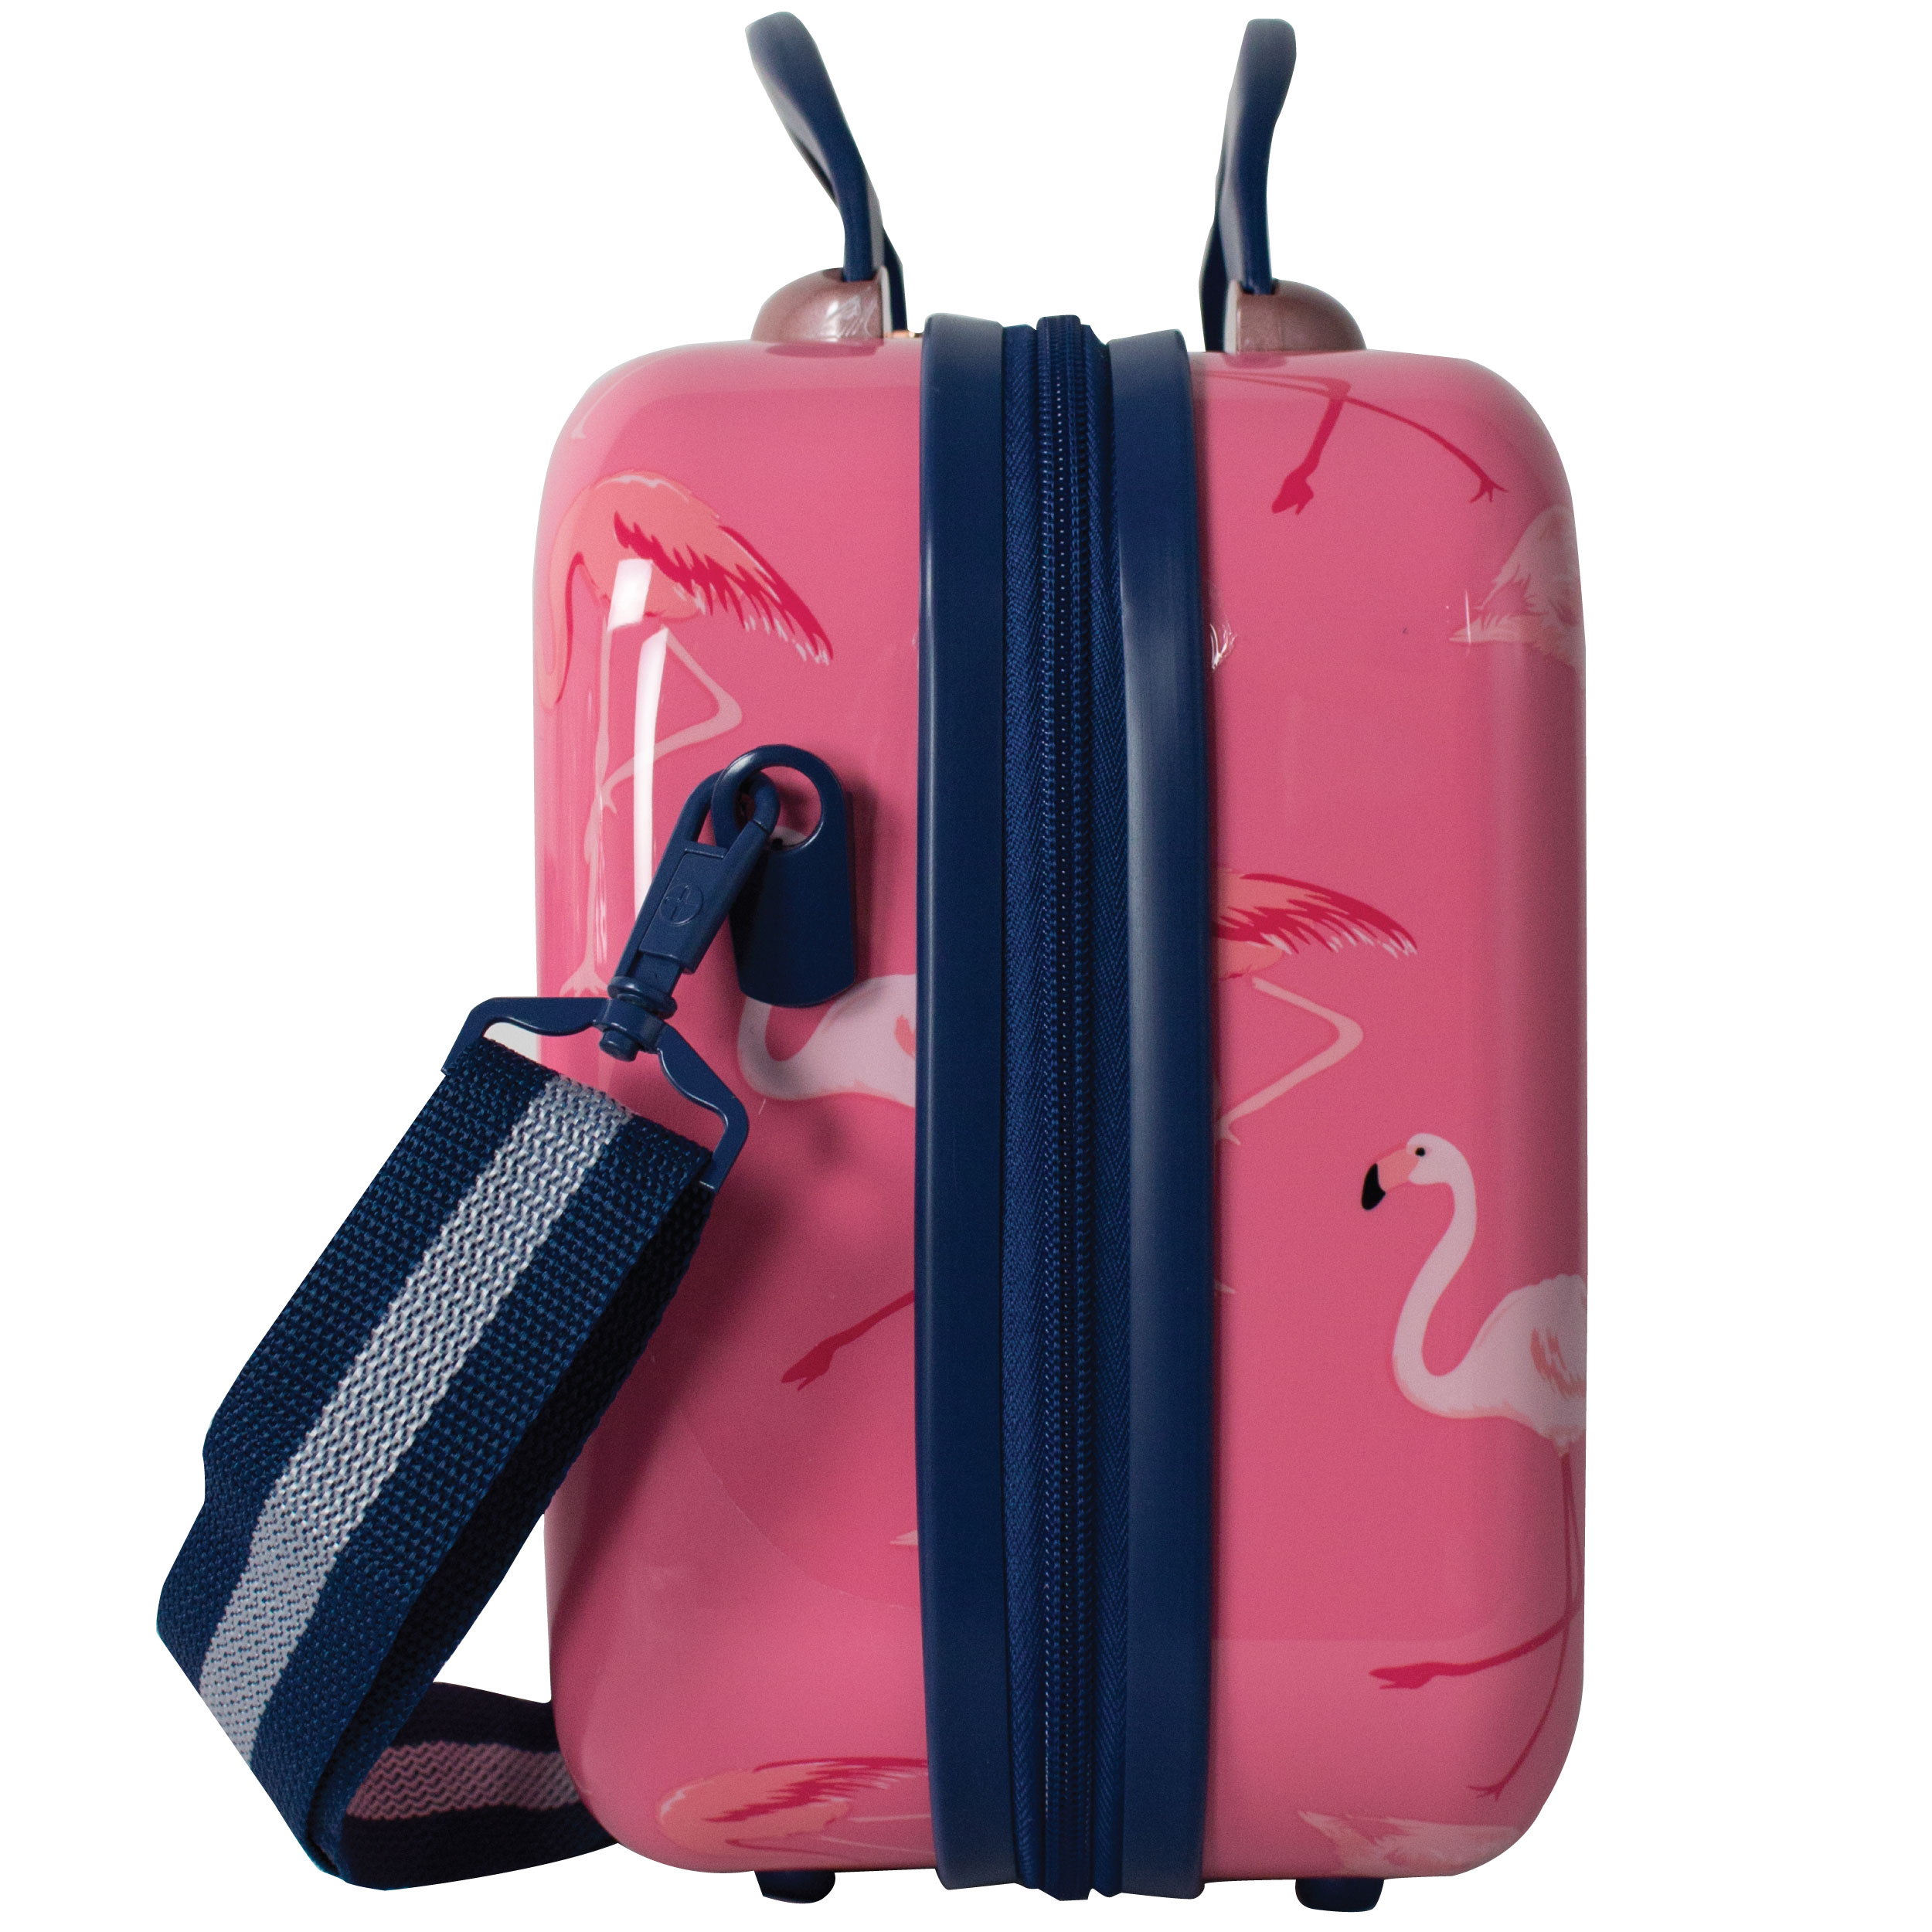 CHP-903 FLAMINGO 2-Piece Luggage & Beauty Case